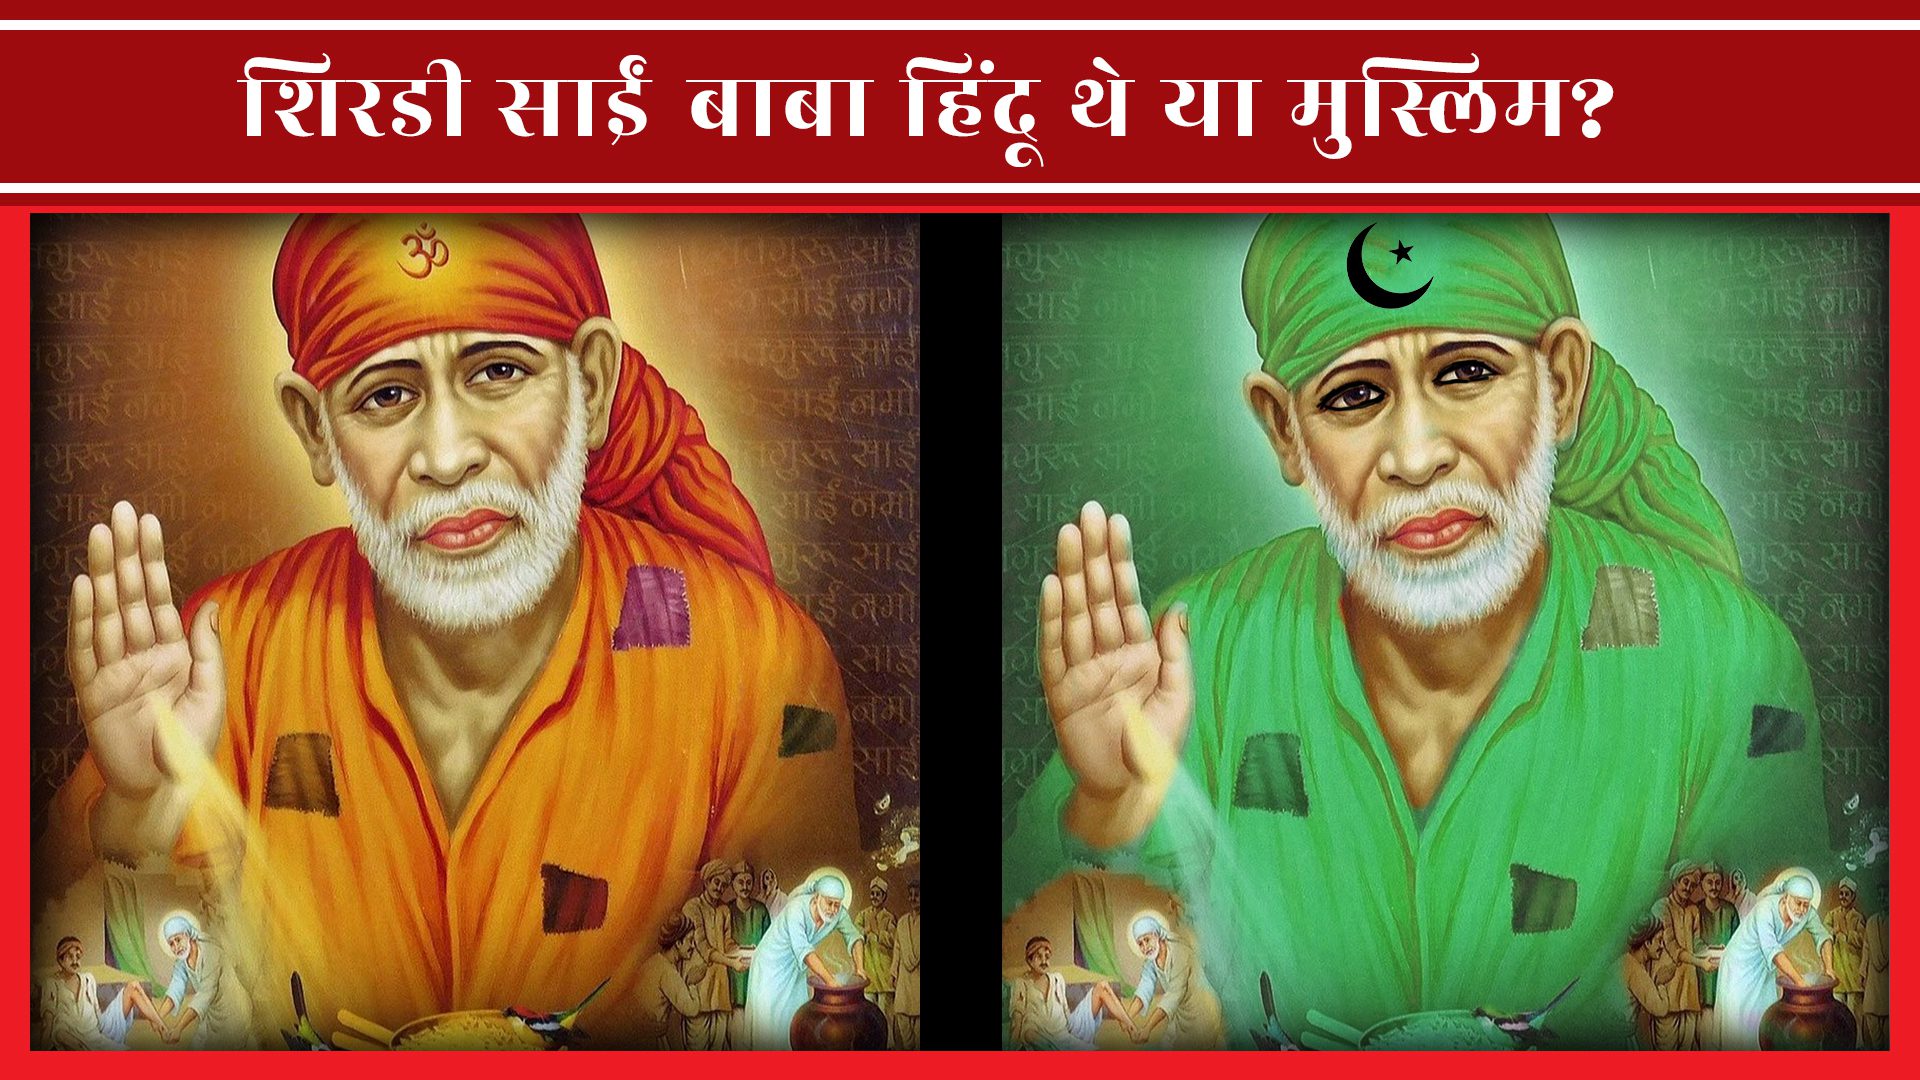 Was Sai Baba Hindu or Muslim? साईं बाबा हिन्दू थे या मुसलमान?